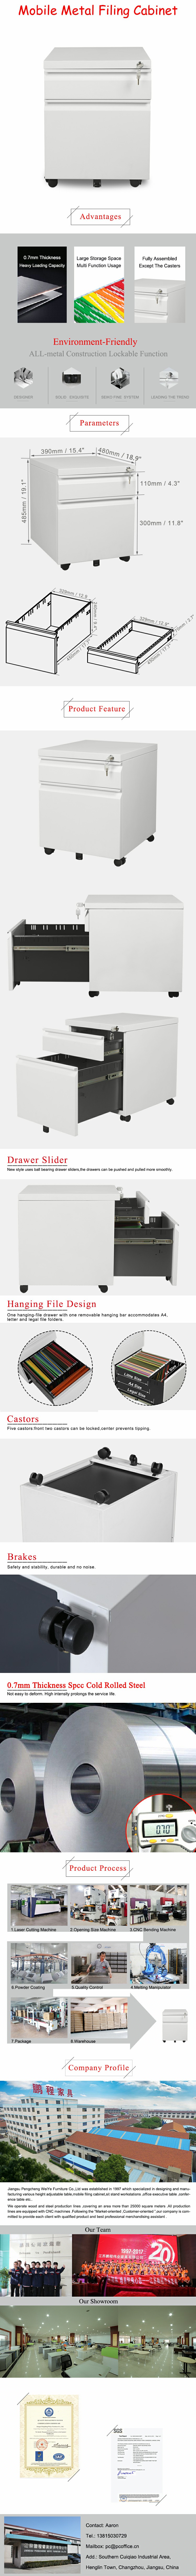 Pengcheng file cabinet manufacturers